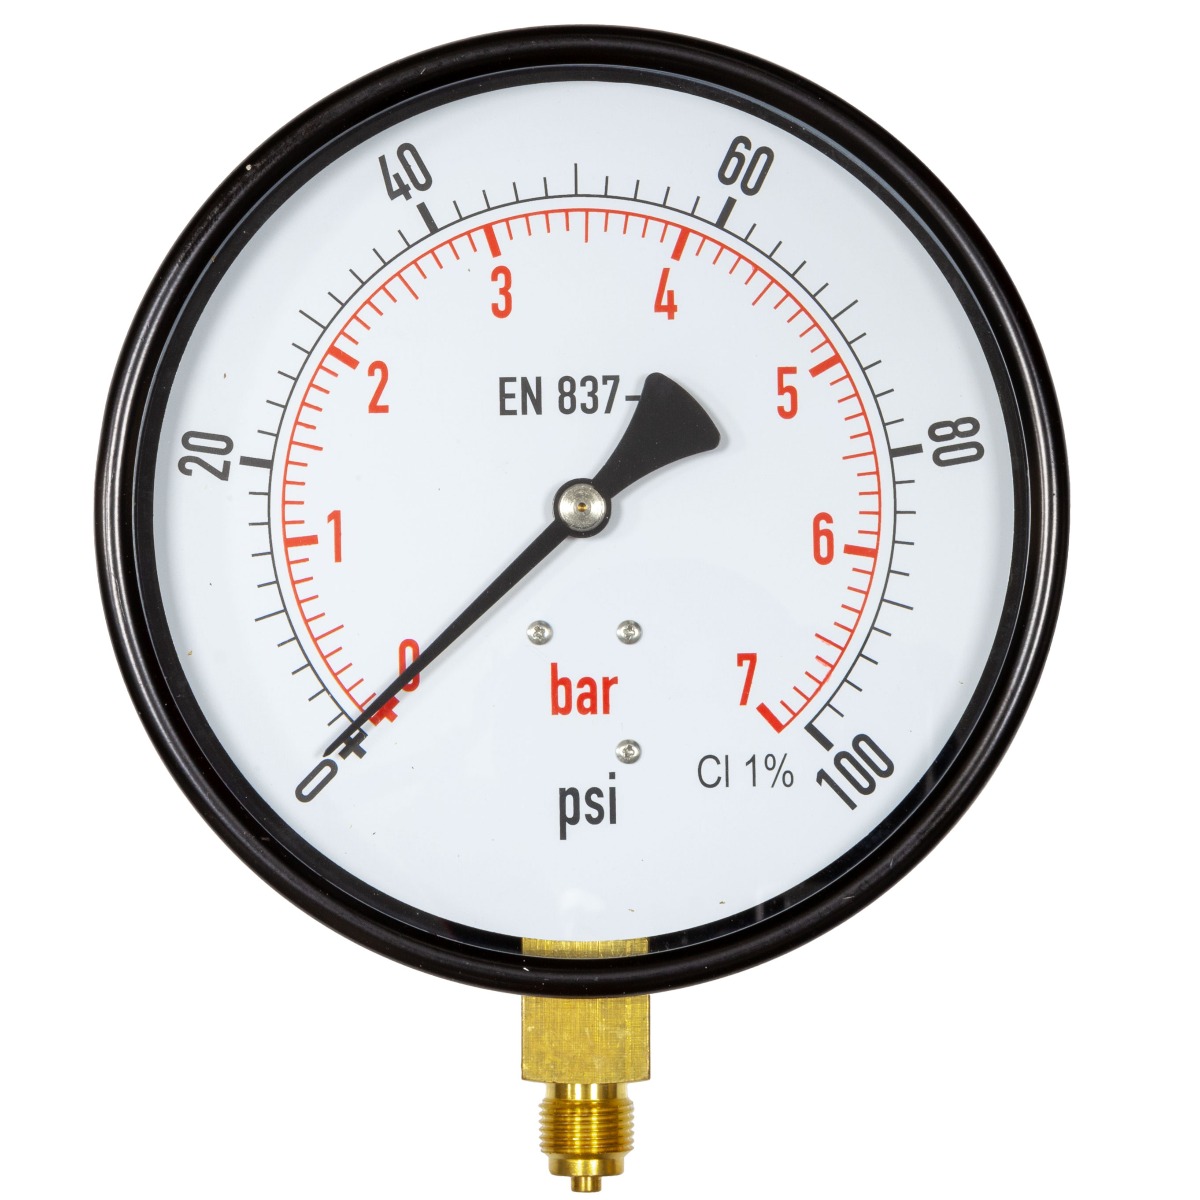 6" Dial Pressure Gauge 0-100 PSI/Bar 3/8"BSP Bottom Connection